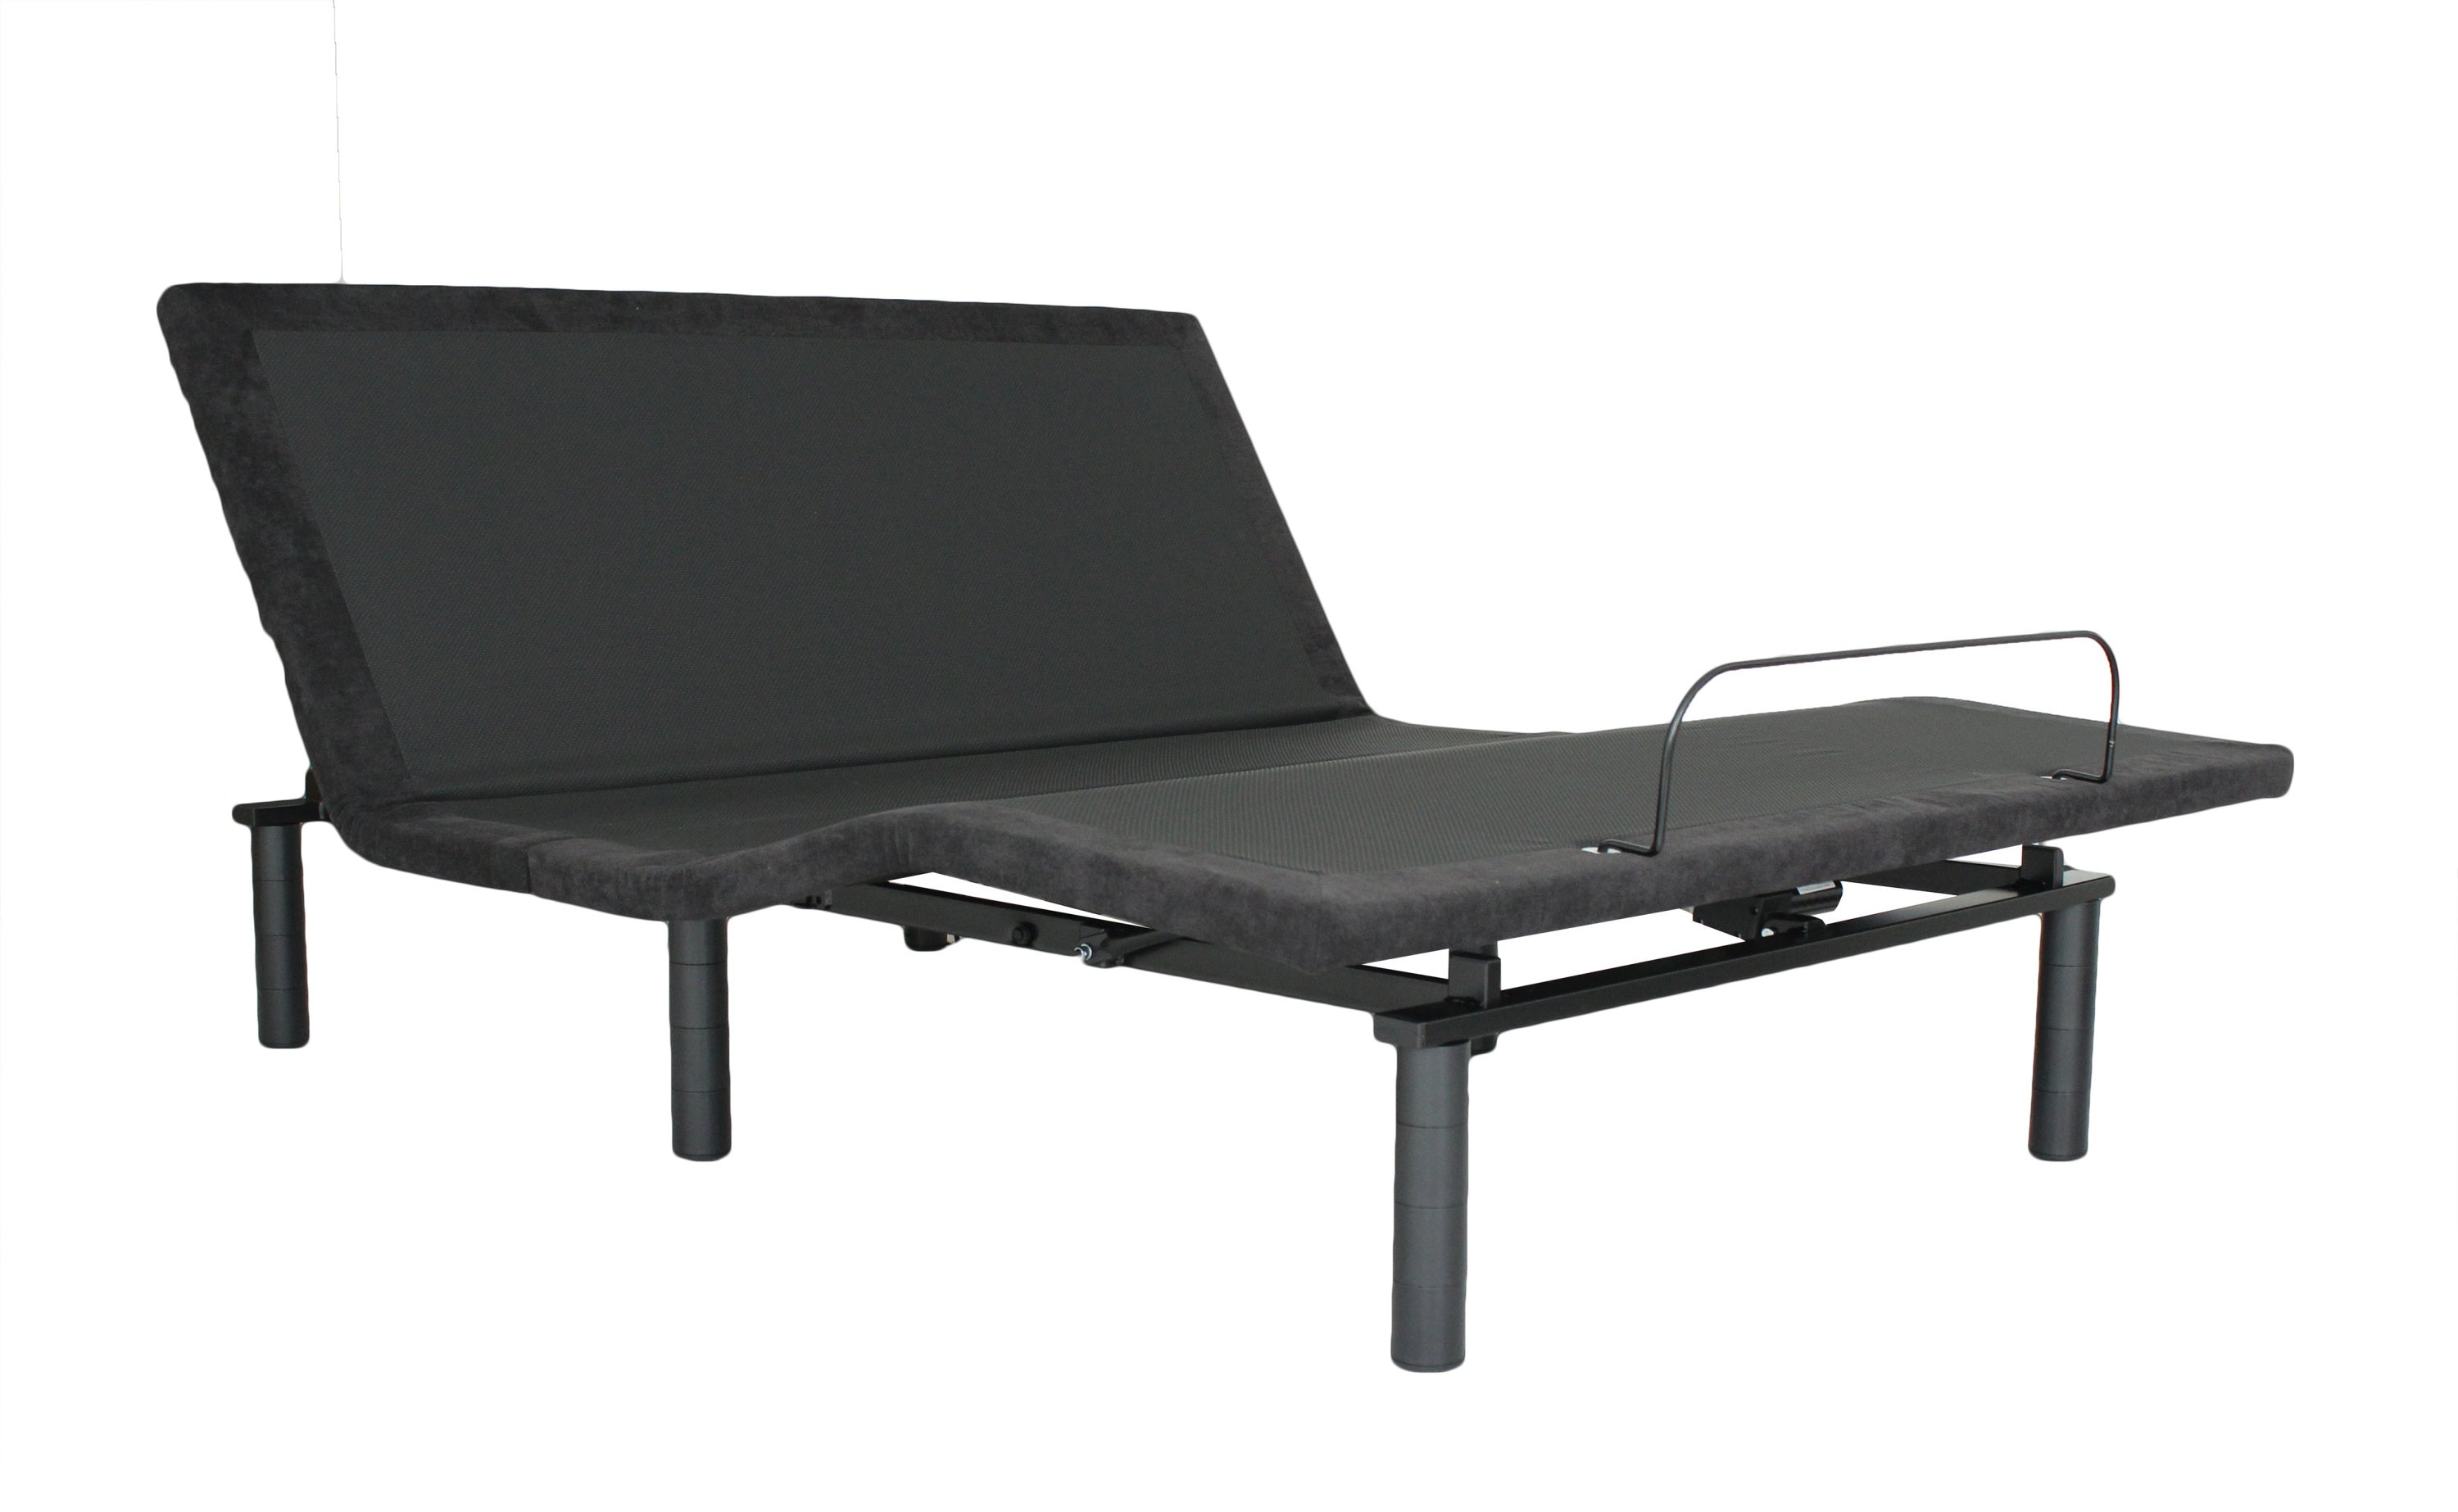 HOT DEAL Adjustable Bed Base Electric Bed Frame with Remote Control Folding Design -